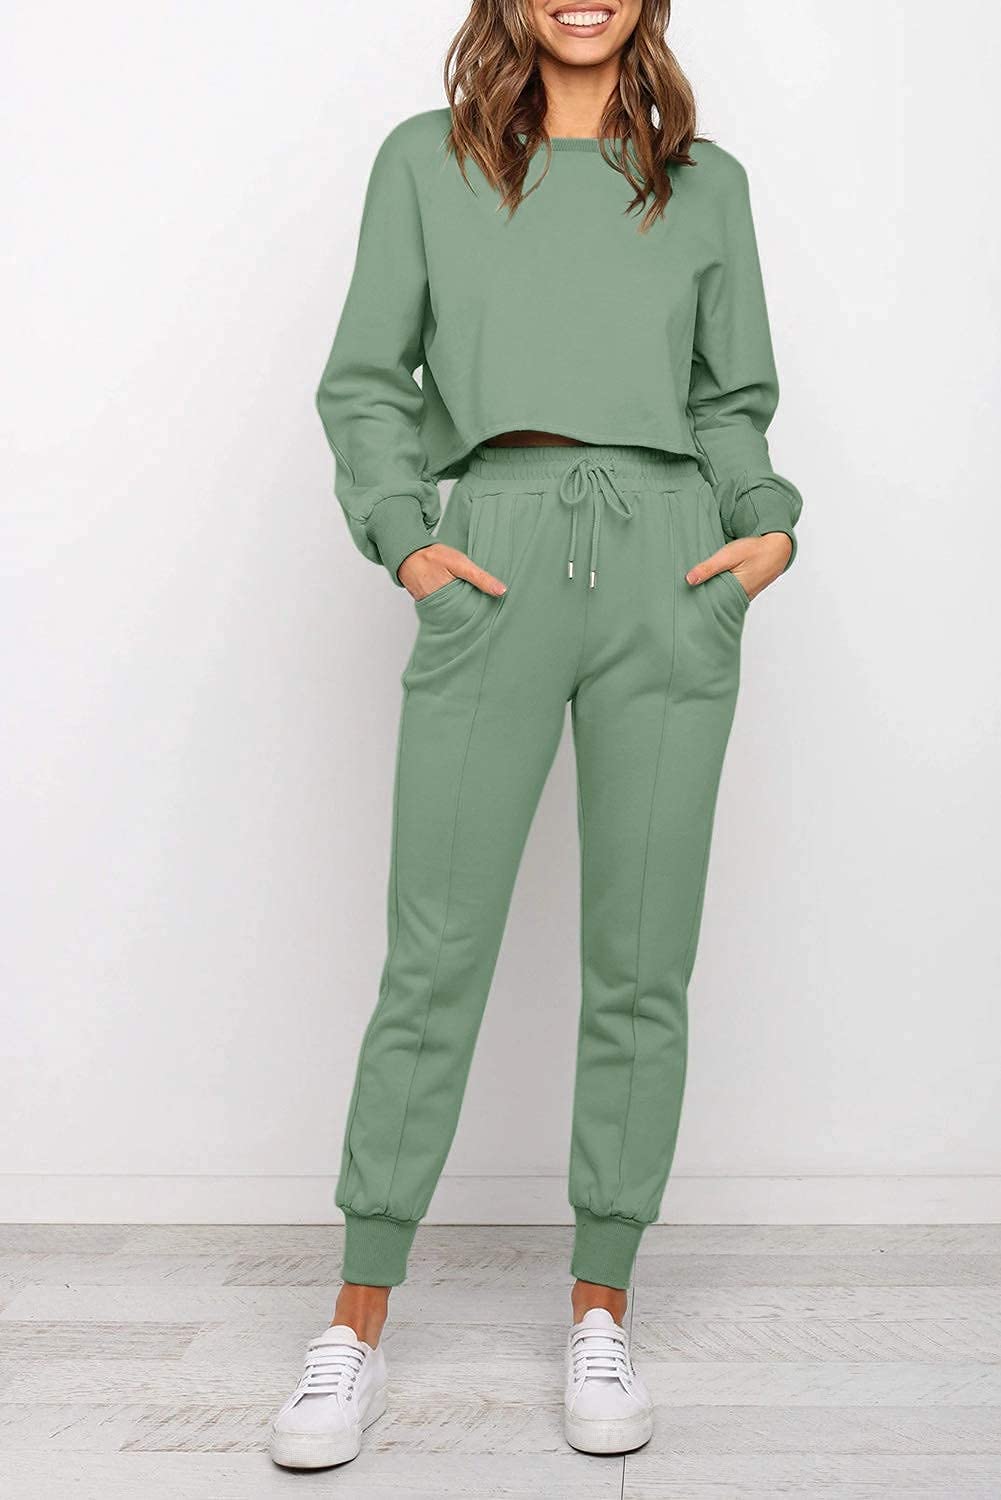 Aiyino Women's Long Sleeve Crop Top and Pants Jogger Set 2 Piece Loungewear Causal Hoodie Sweatsuits - image 3 of 6